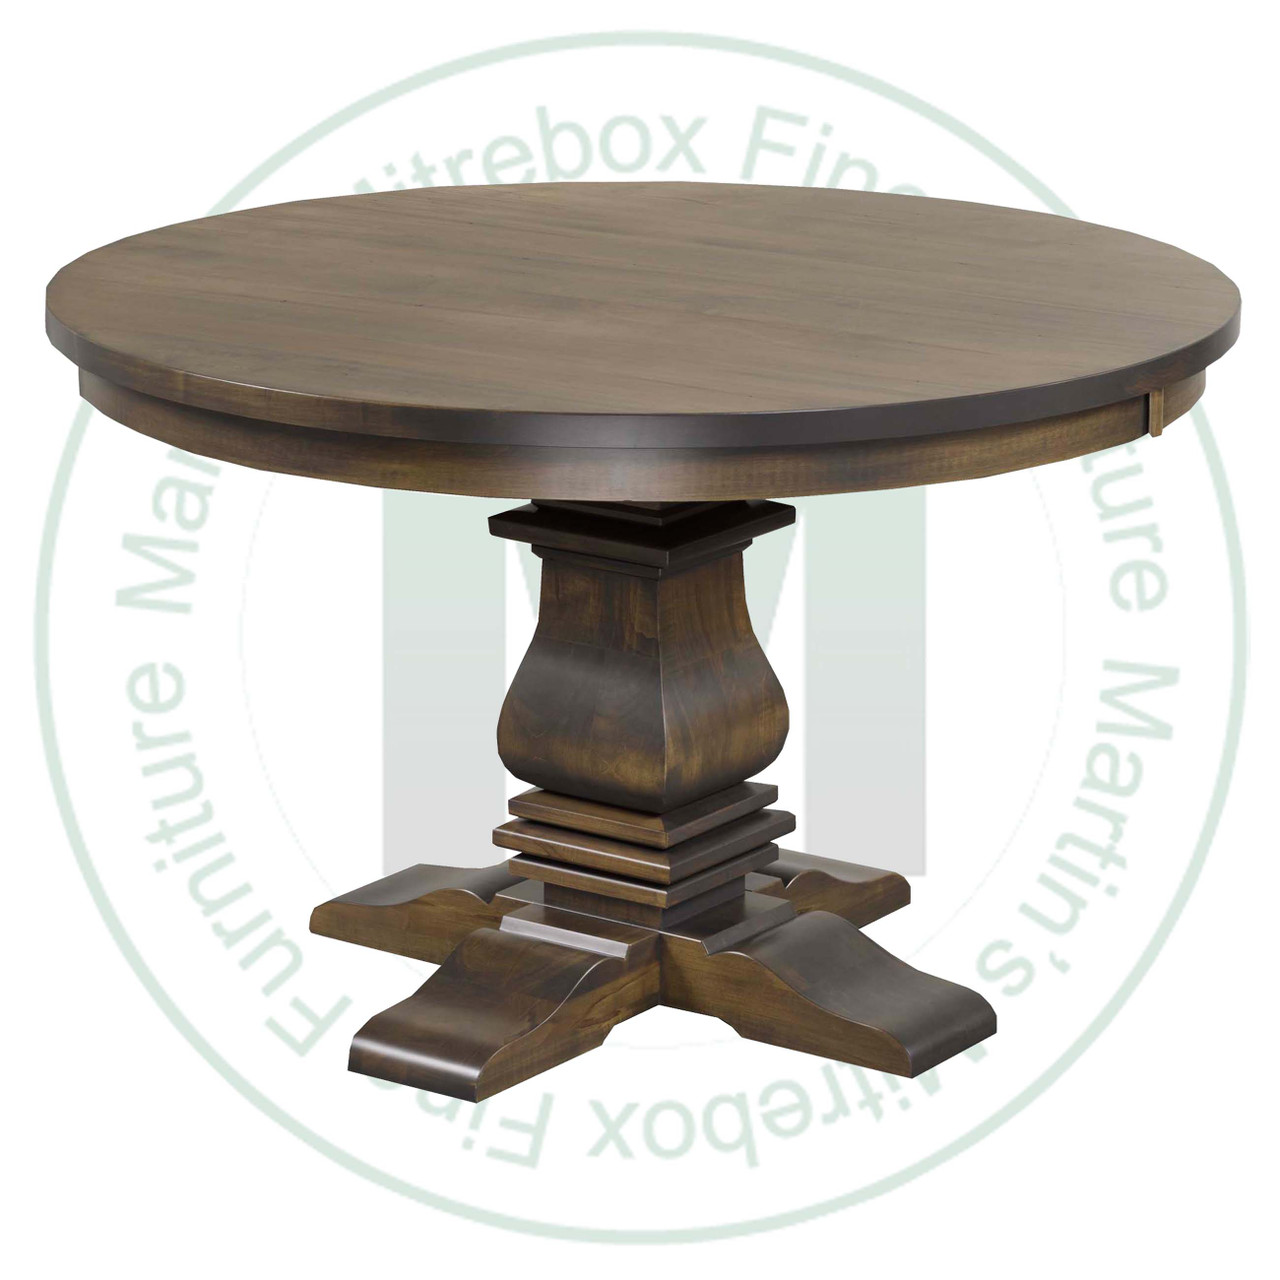 Oak Spartan Collection Single Pedestal Table 54''D x 54''W x 30''H. Table Has 1.25'' Thick Top